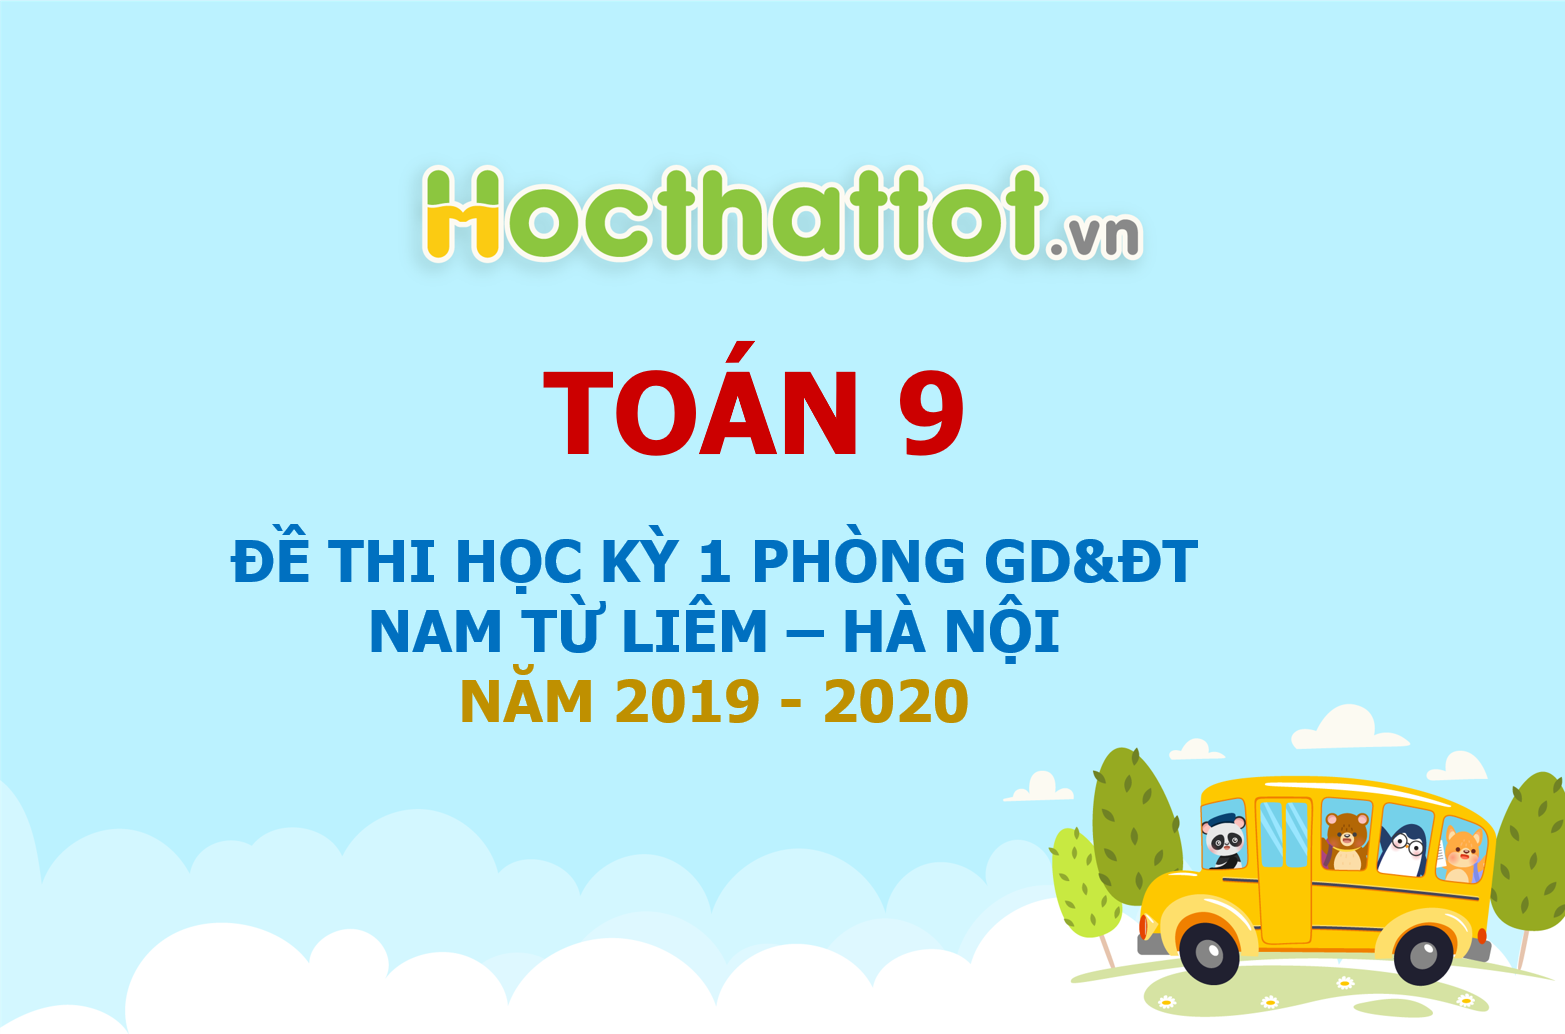 de-thi-hk1-toan-9-nam-2019-2020-phong-gddt-nam-tu-liem-ha-noi